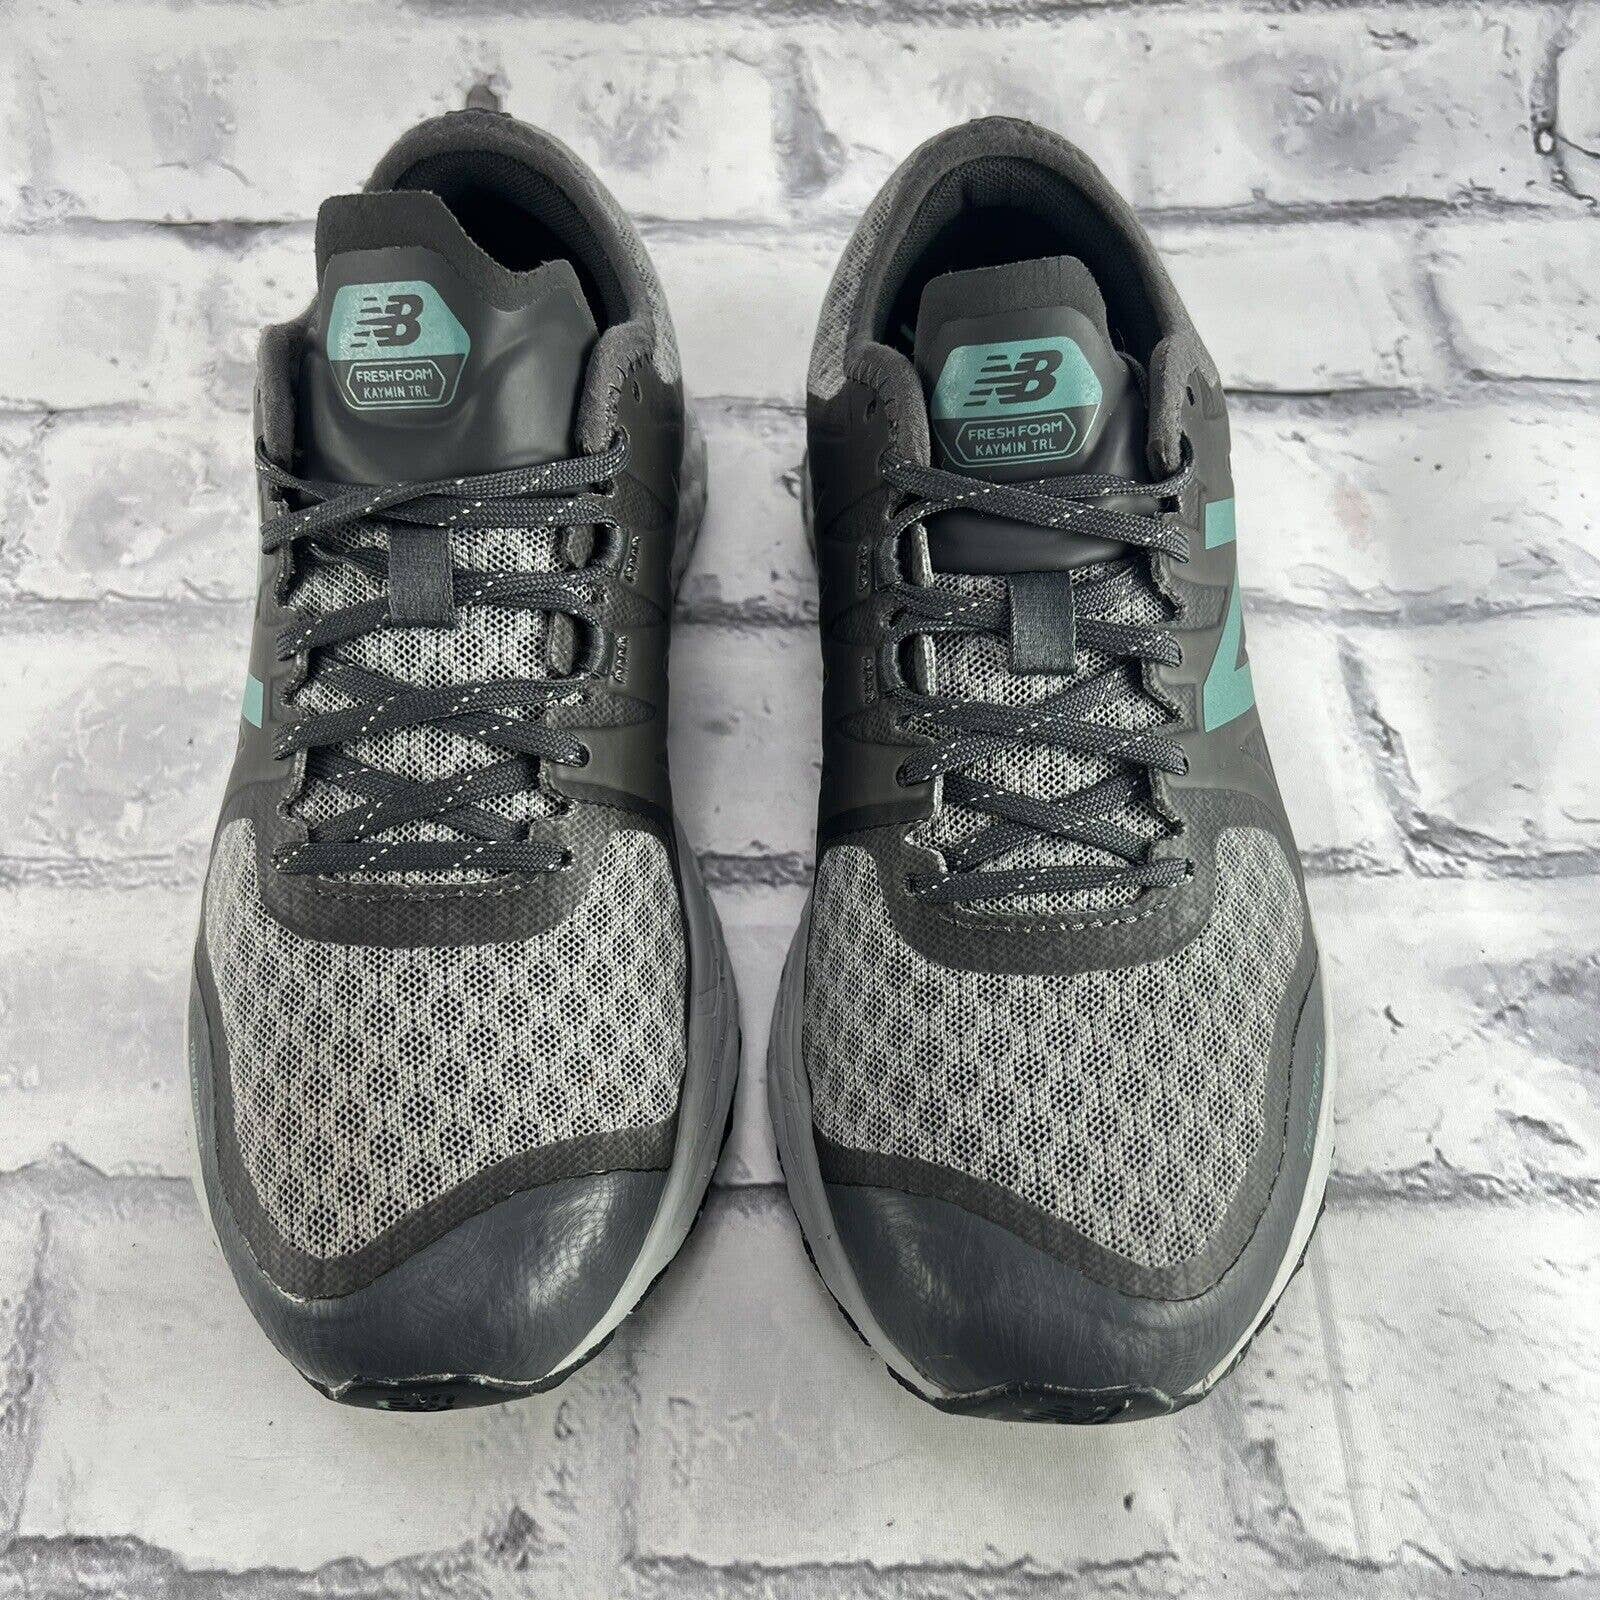 New Balance FF Kaymin Trail Sneakers Women’s Size 7 Gray Running Shoes WTKYMRR1